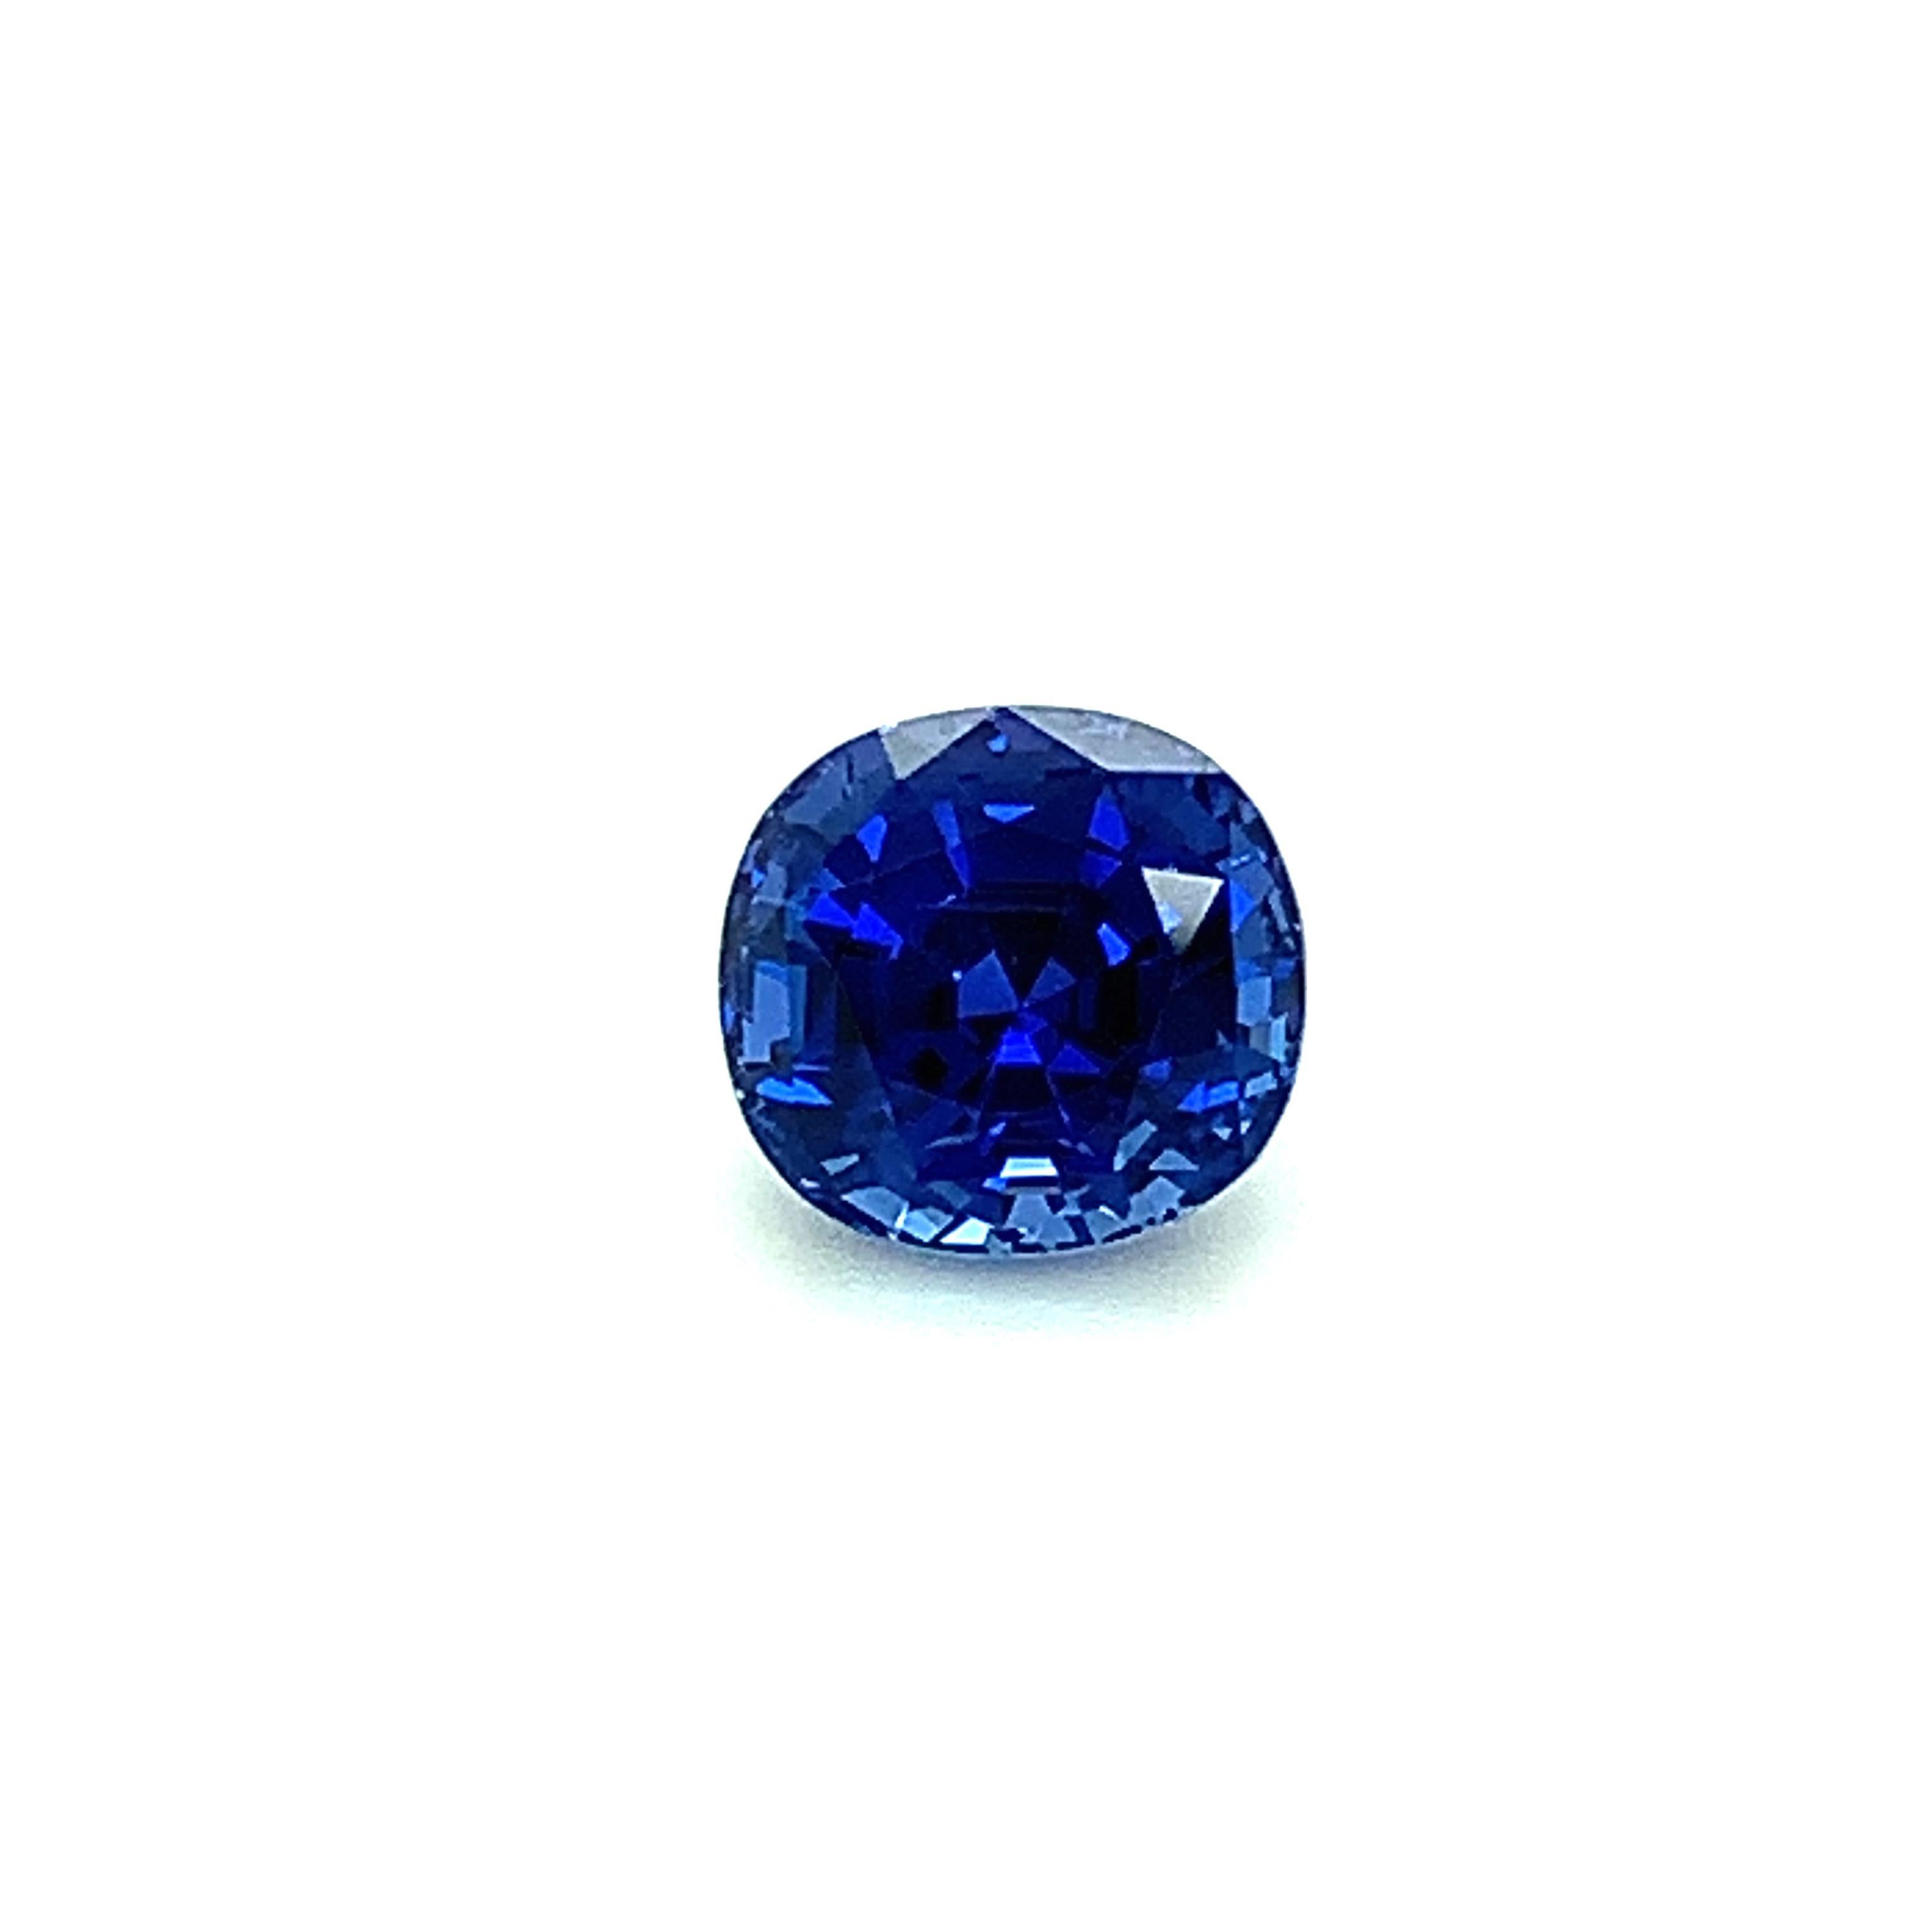 Unheated 3.32 Carat Ceylon Blue Sapphire, Unset Loose Gemstone, GIA Certified 2